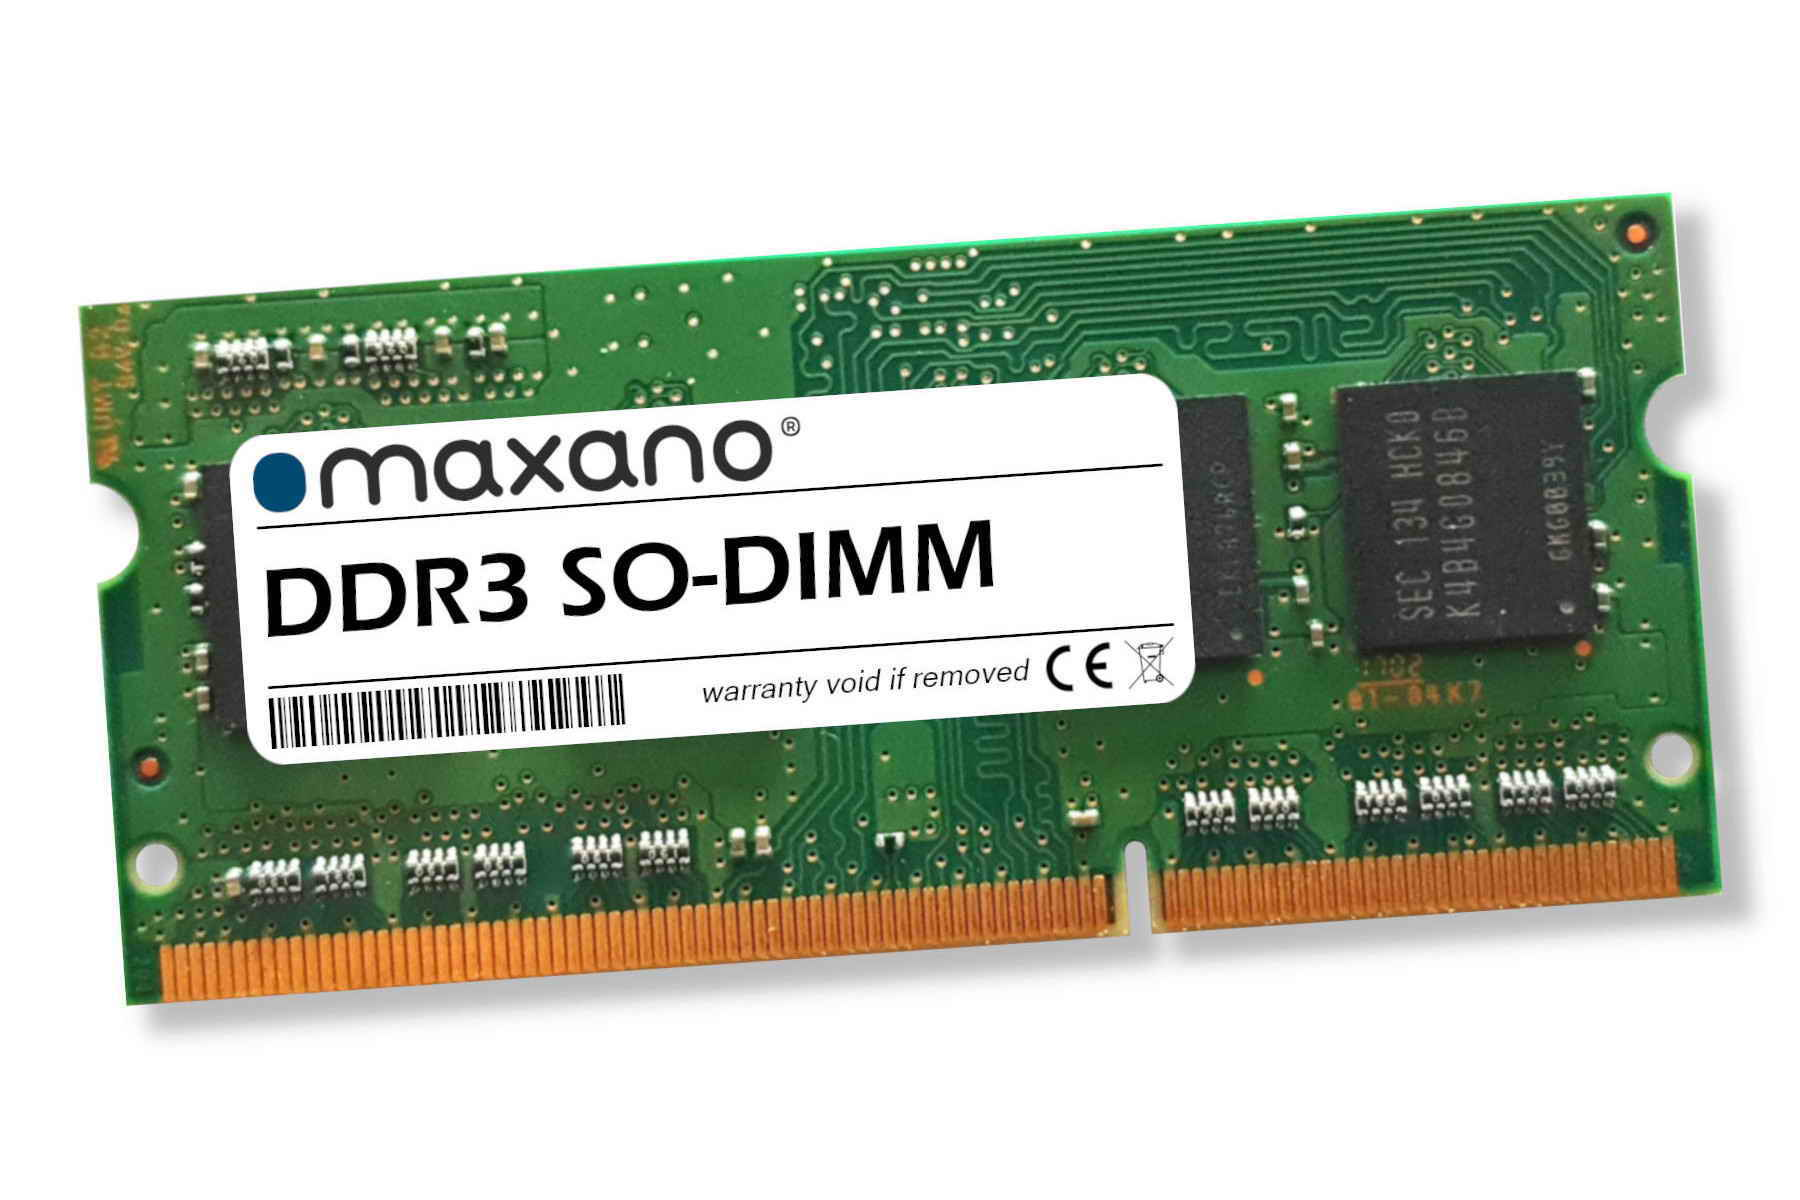 RAM Arbeitsspeicher SO-DIMM) 4 MAXANO (PC3-12800 SDRAM AS5008T Asustor GB 4GB für